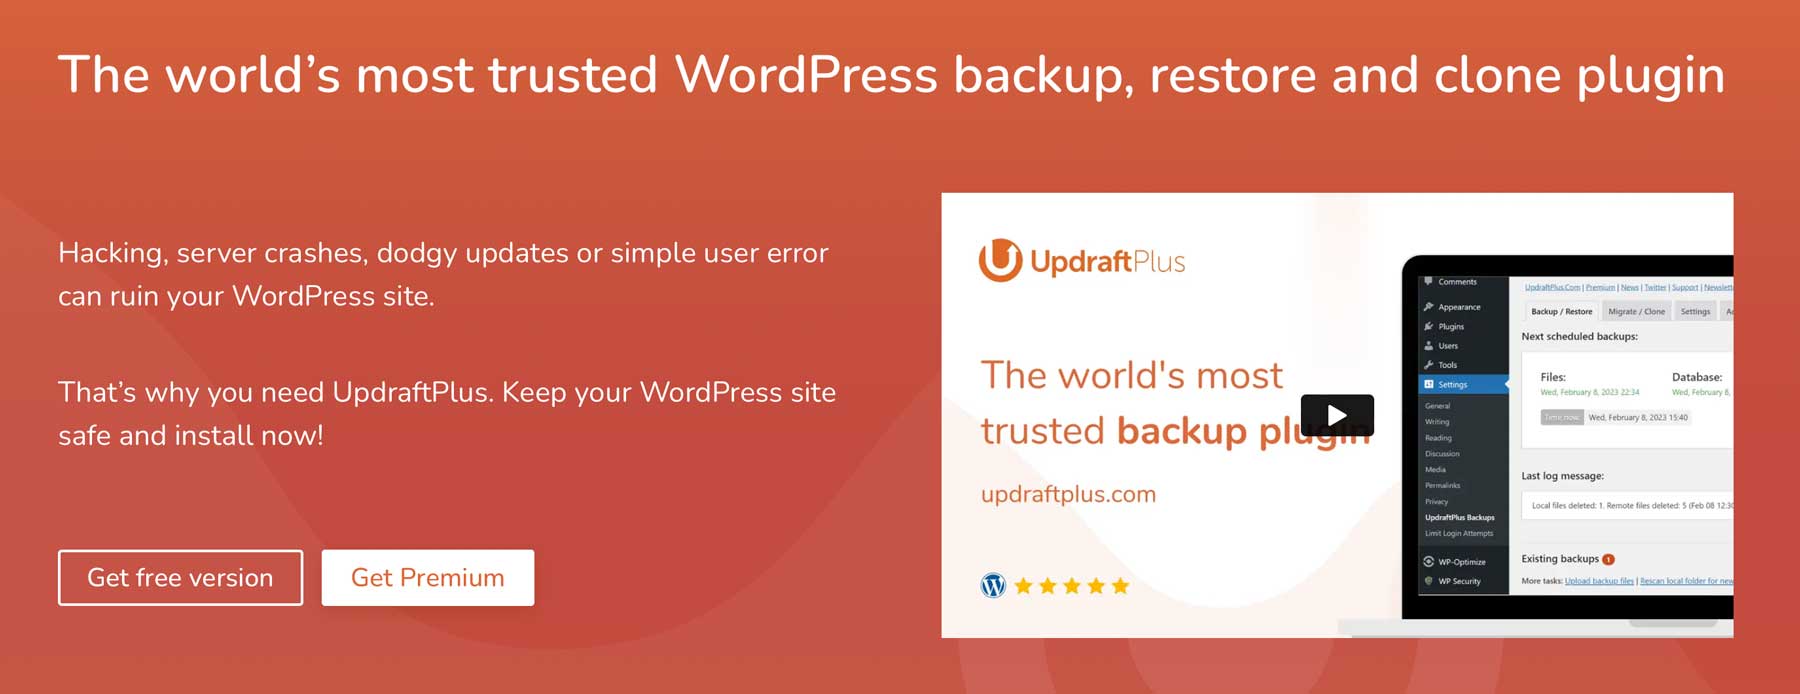 UpdraftPlus best backup plugin